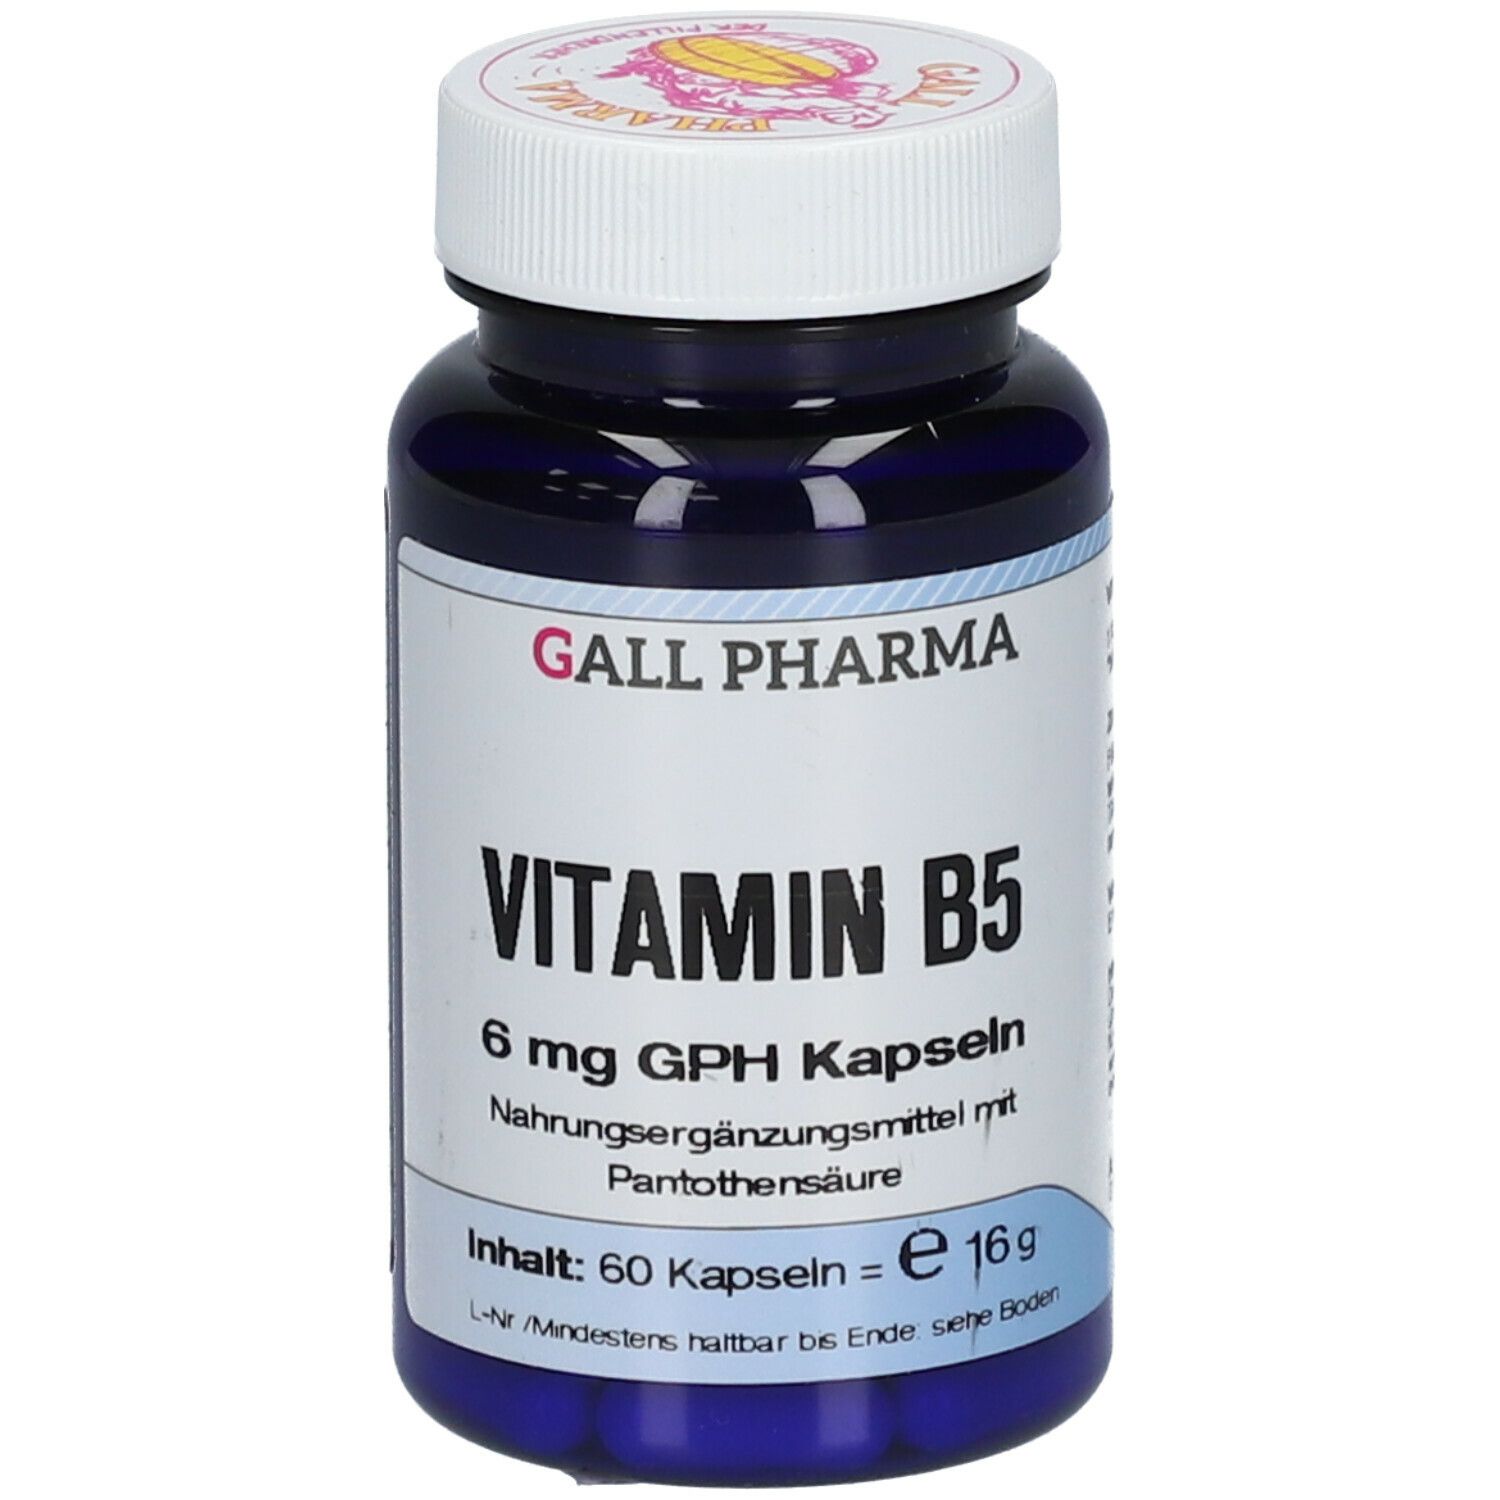 Gall Pharma Vitamine B5 6 mg GPH